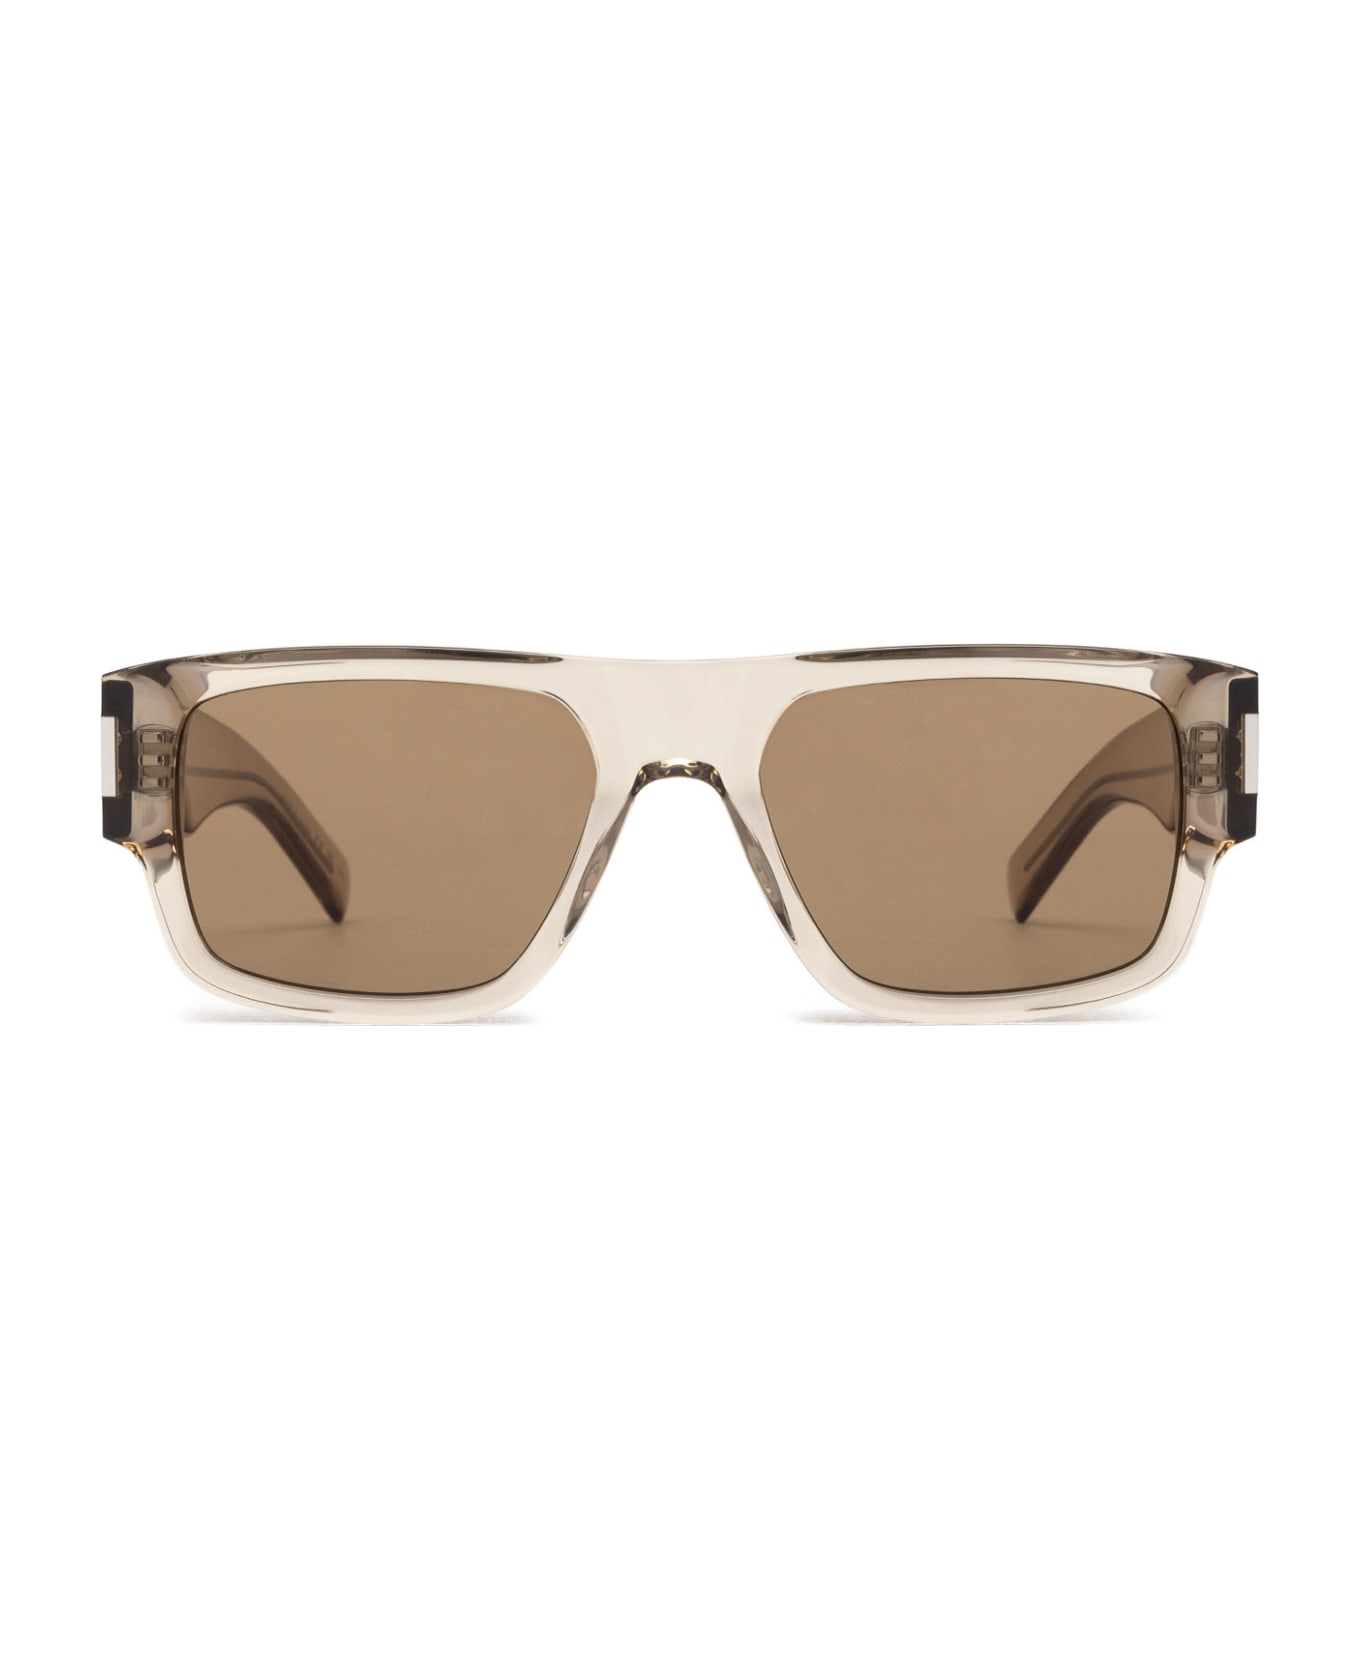 Saint Laurent Eyewear Sl 659 Beige Sunglasses - Beige